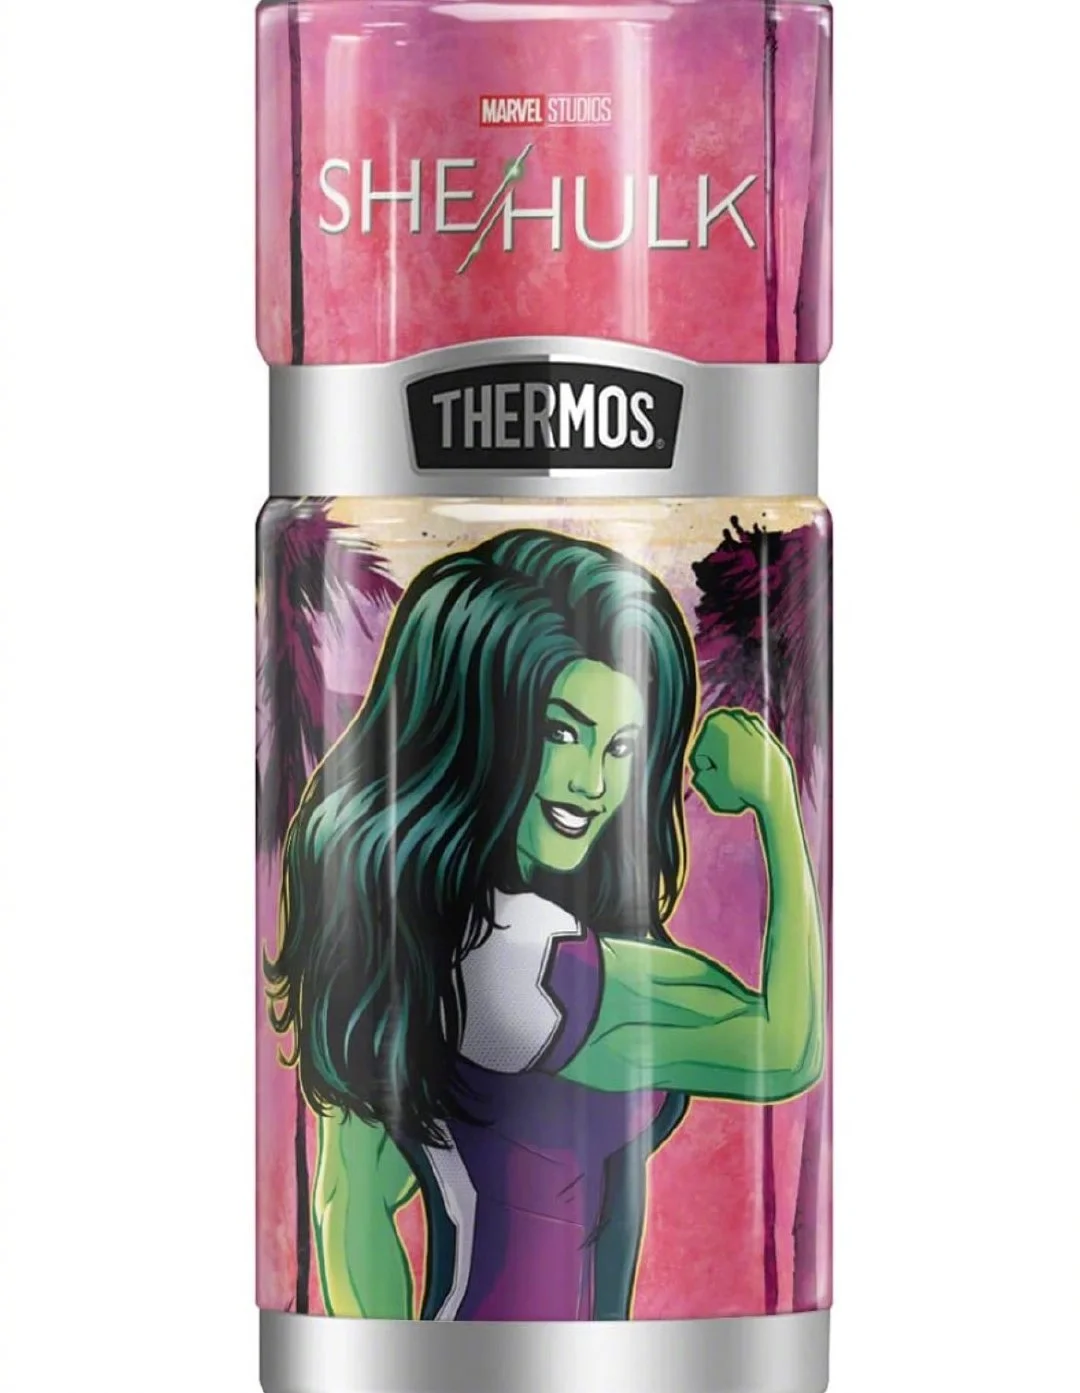 Marvel's new drama "She-Hulk" exposes peripheral art design